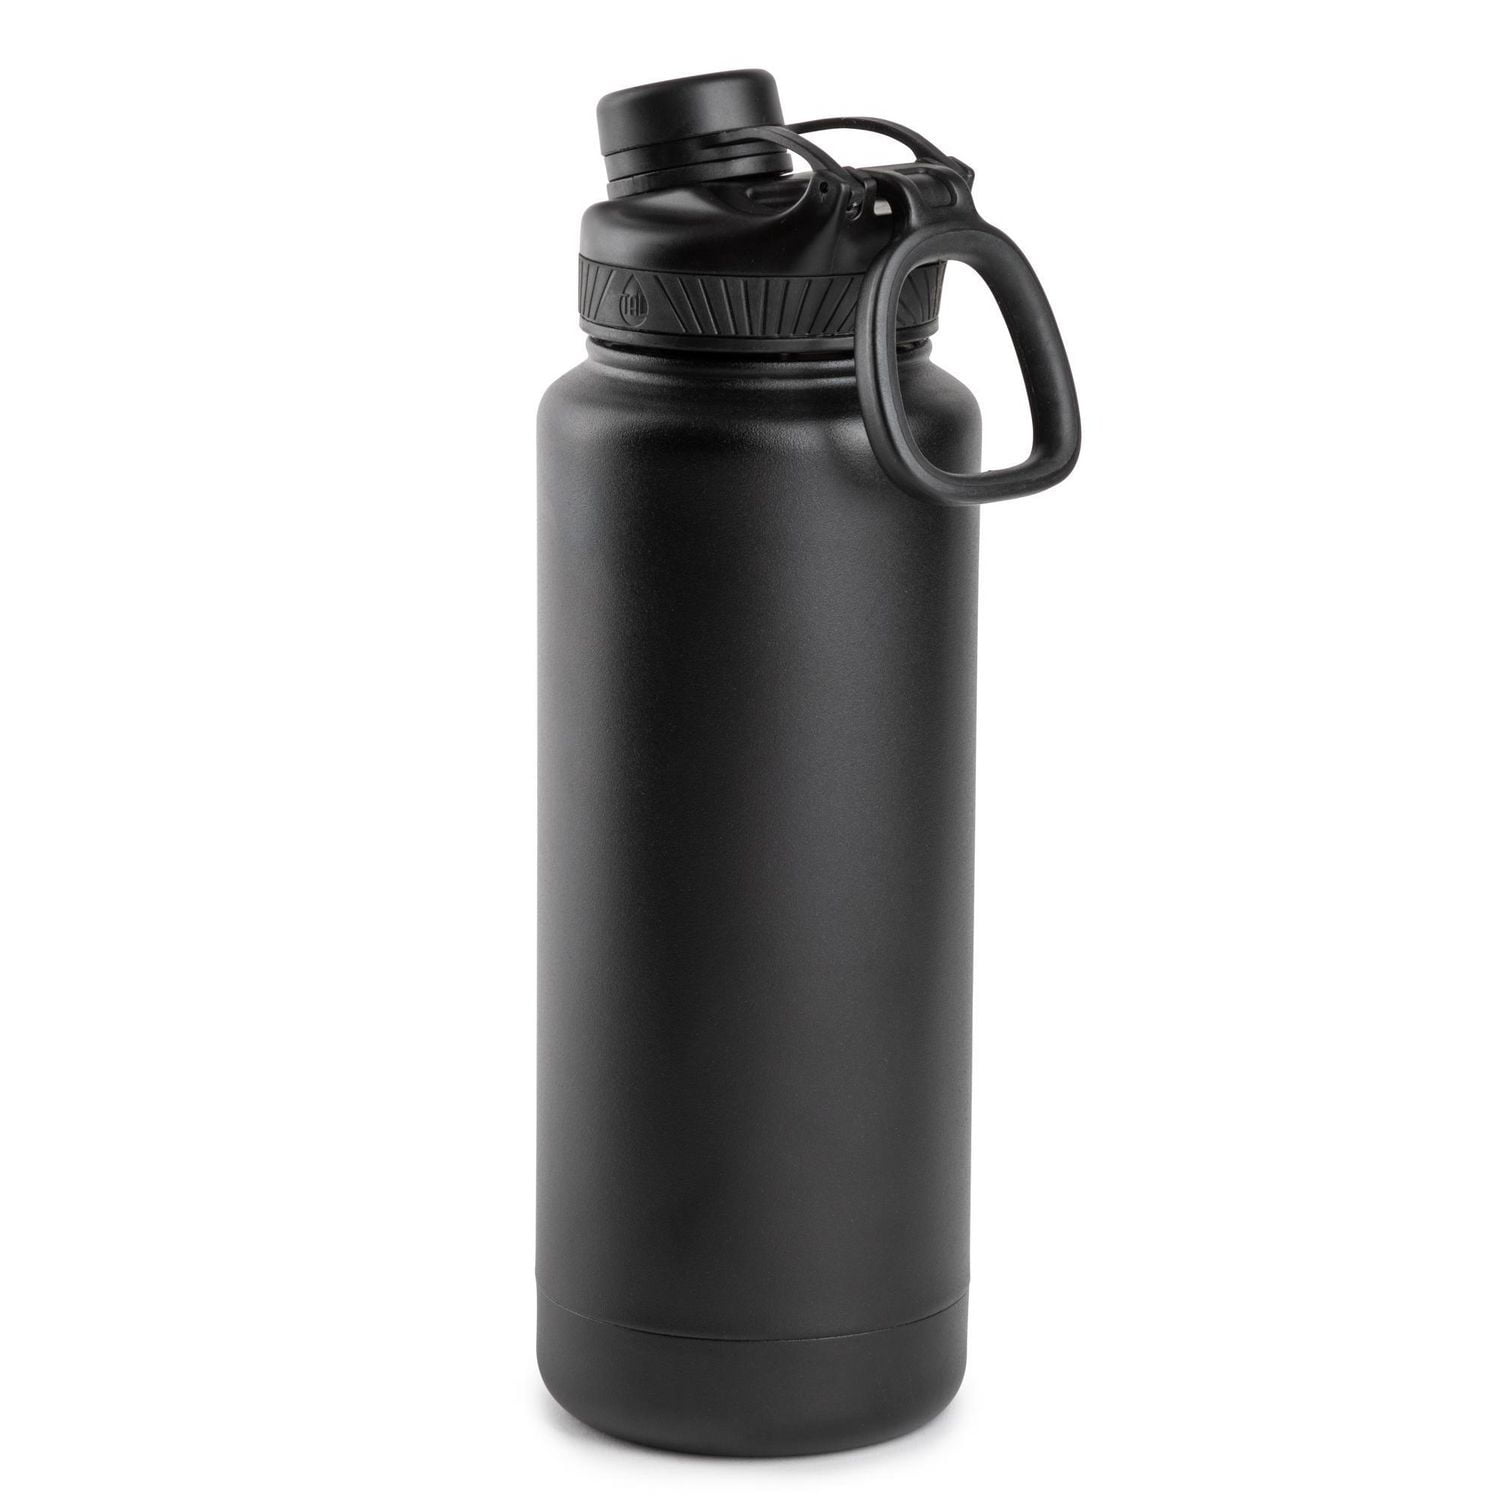 TAL Stainless Steel Ranger Water Bottle 64oz, Black